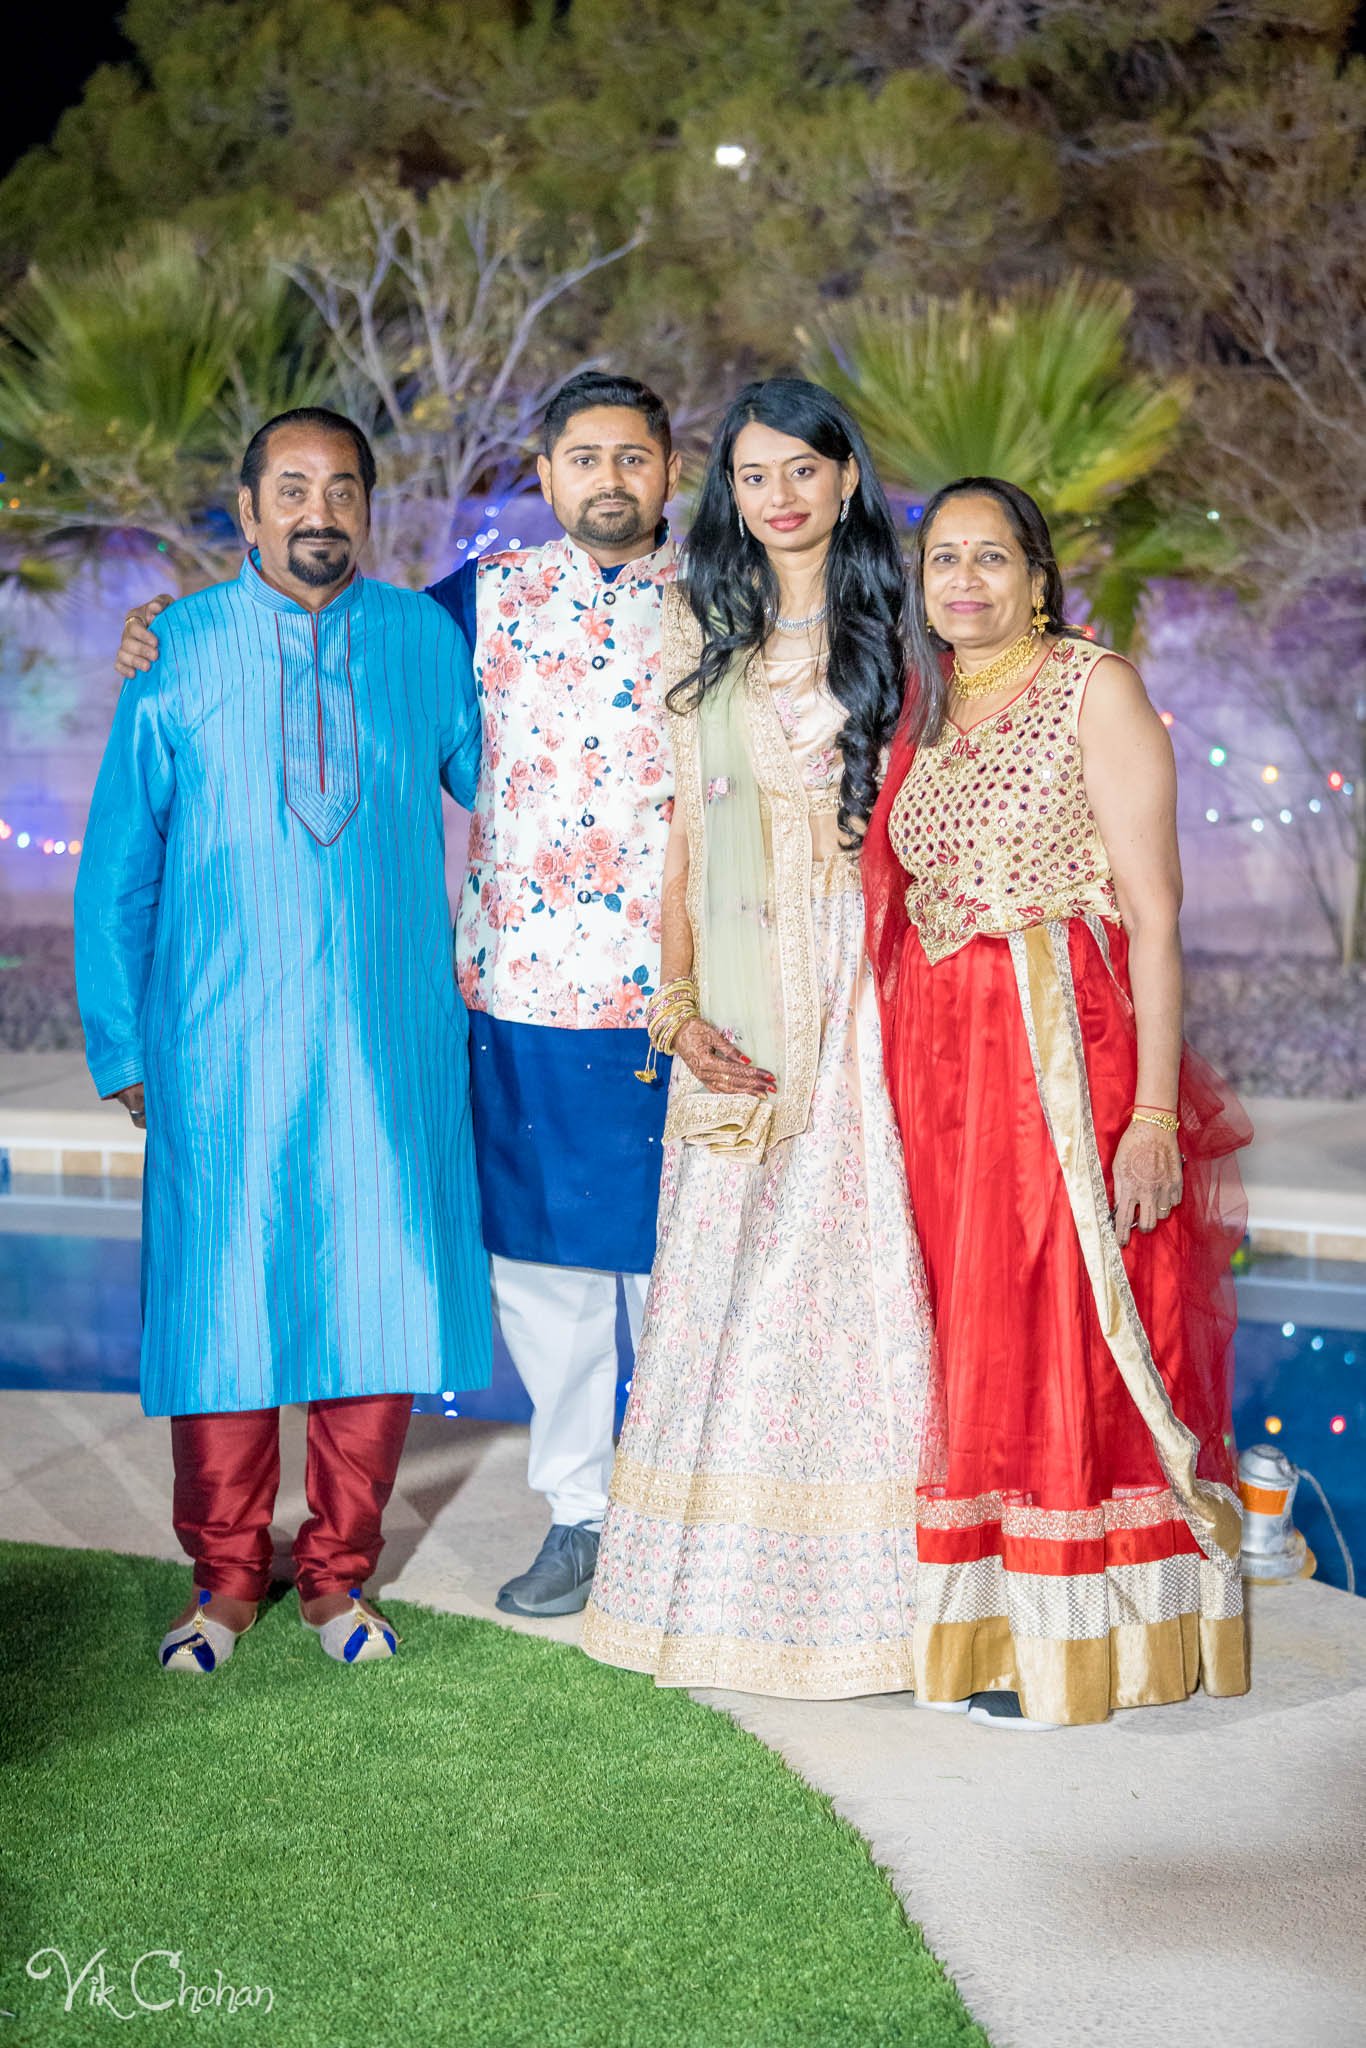 2022-02-04-Hely-&-Parth-Garba-Night-Indian-Wedding-Vik-Chohan-Photography-Photo-Booth-Social-Media-VCP-151.jpg